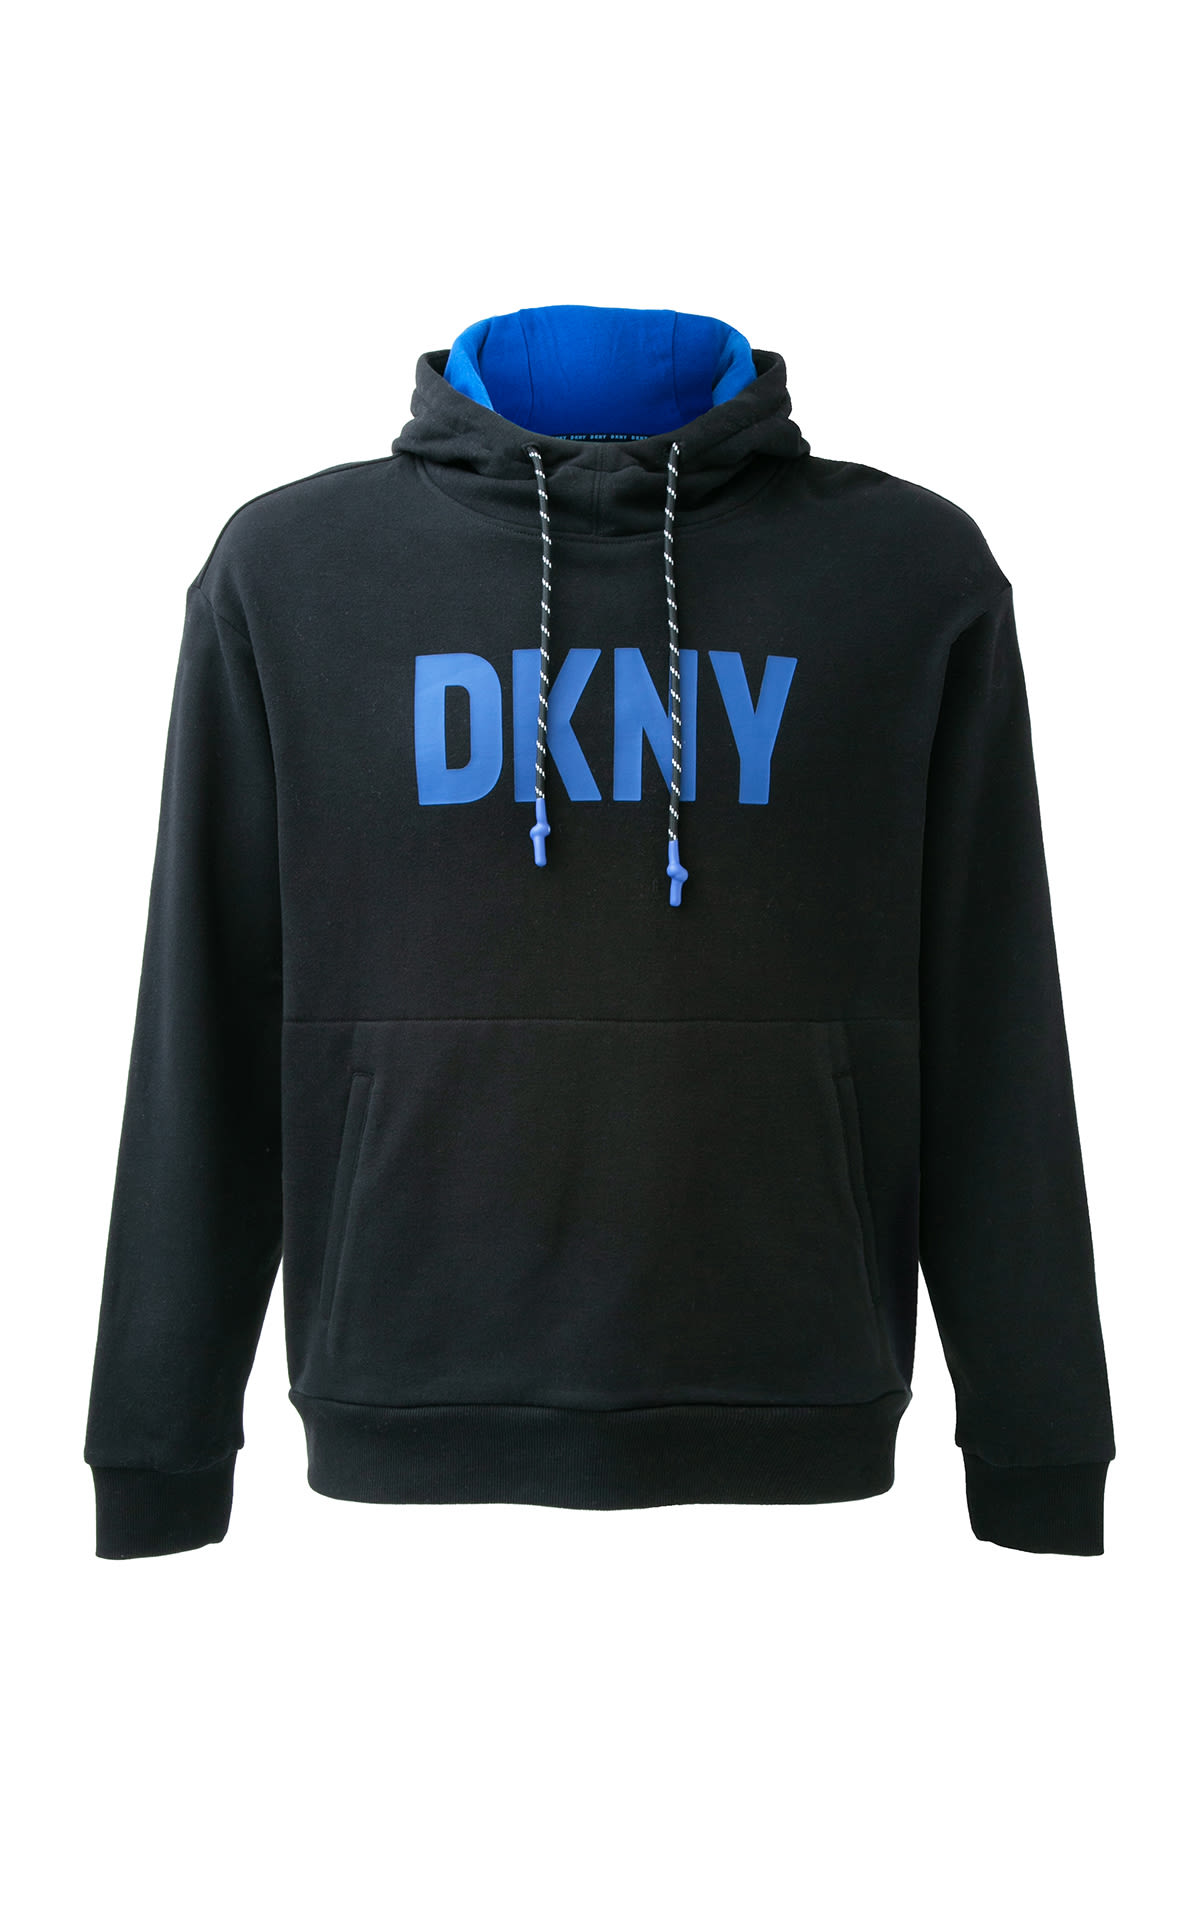 DKNY DKNY fleece hoodie from Bicester Village